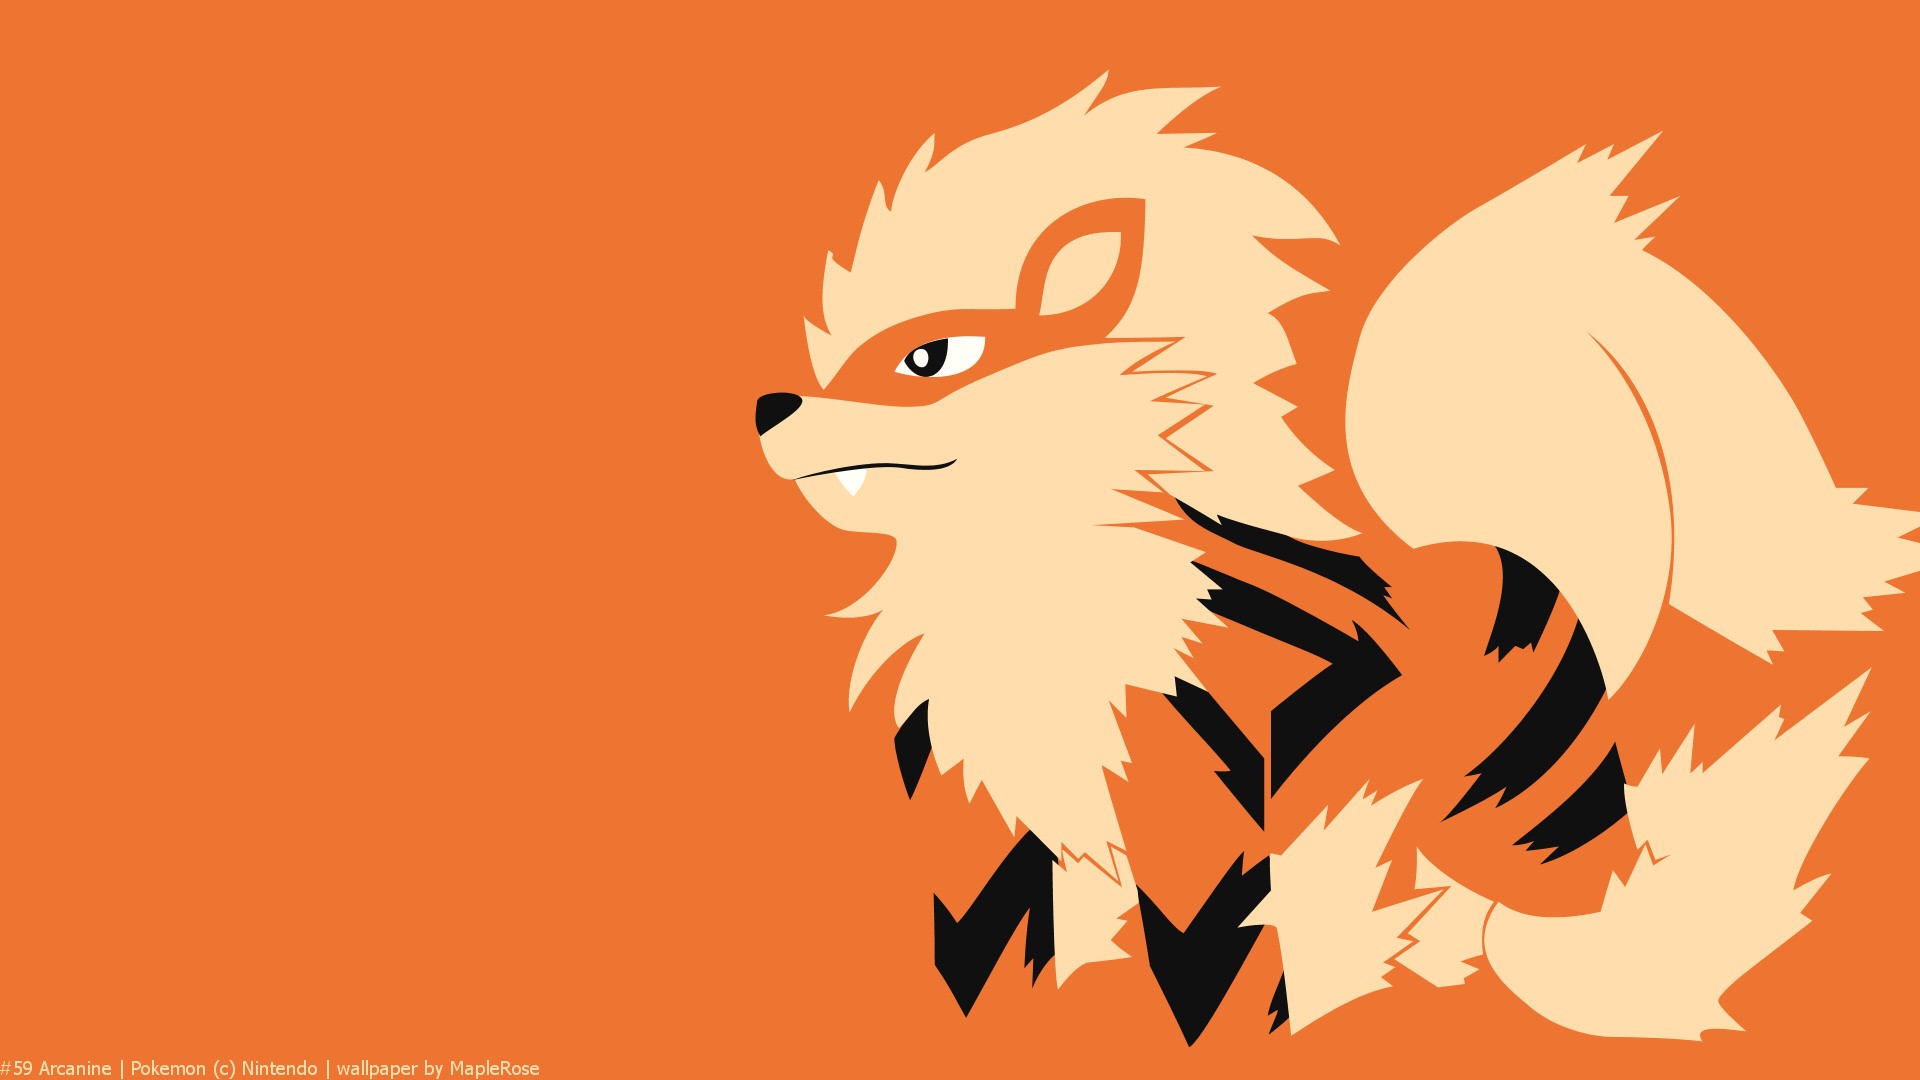 General 1920x1080 minimalism animals artwork orange orange background Pokémon video game characters